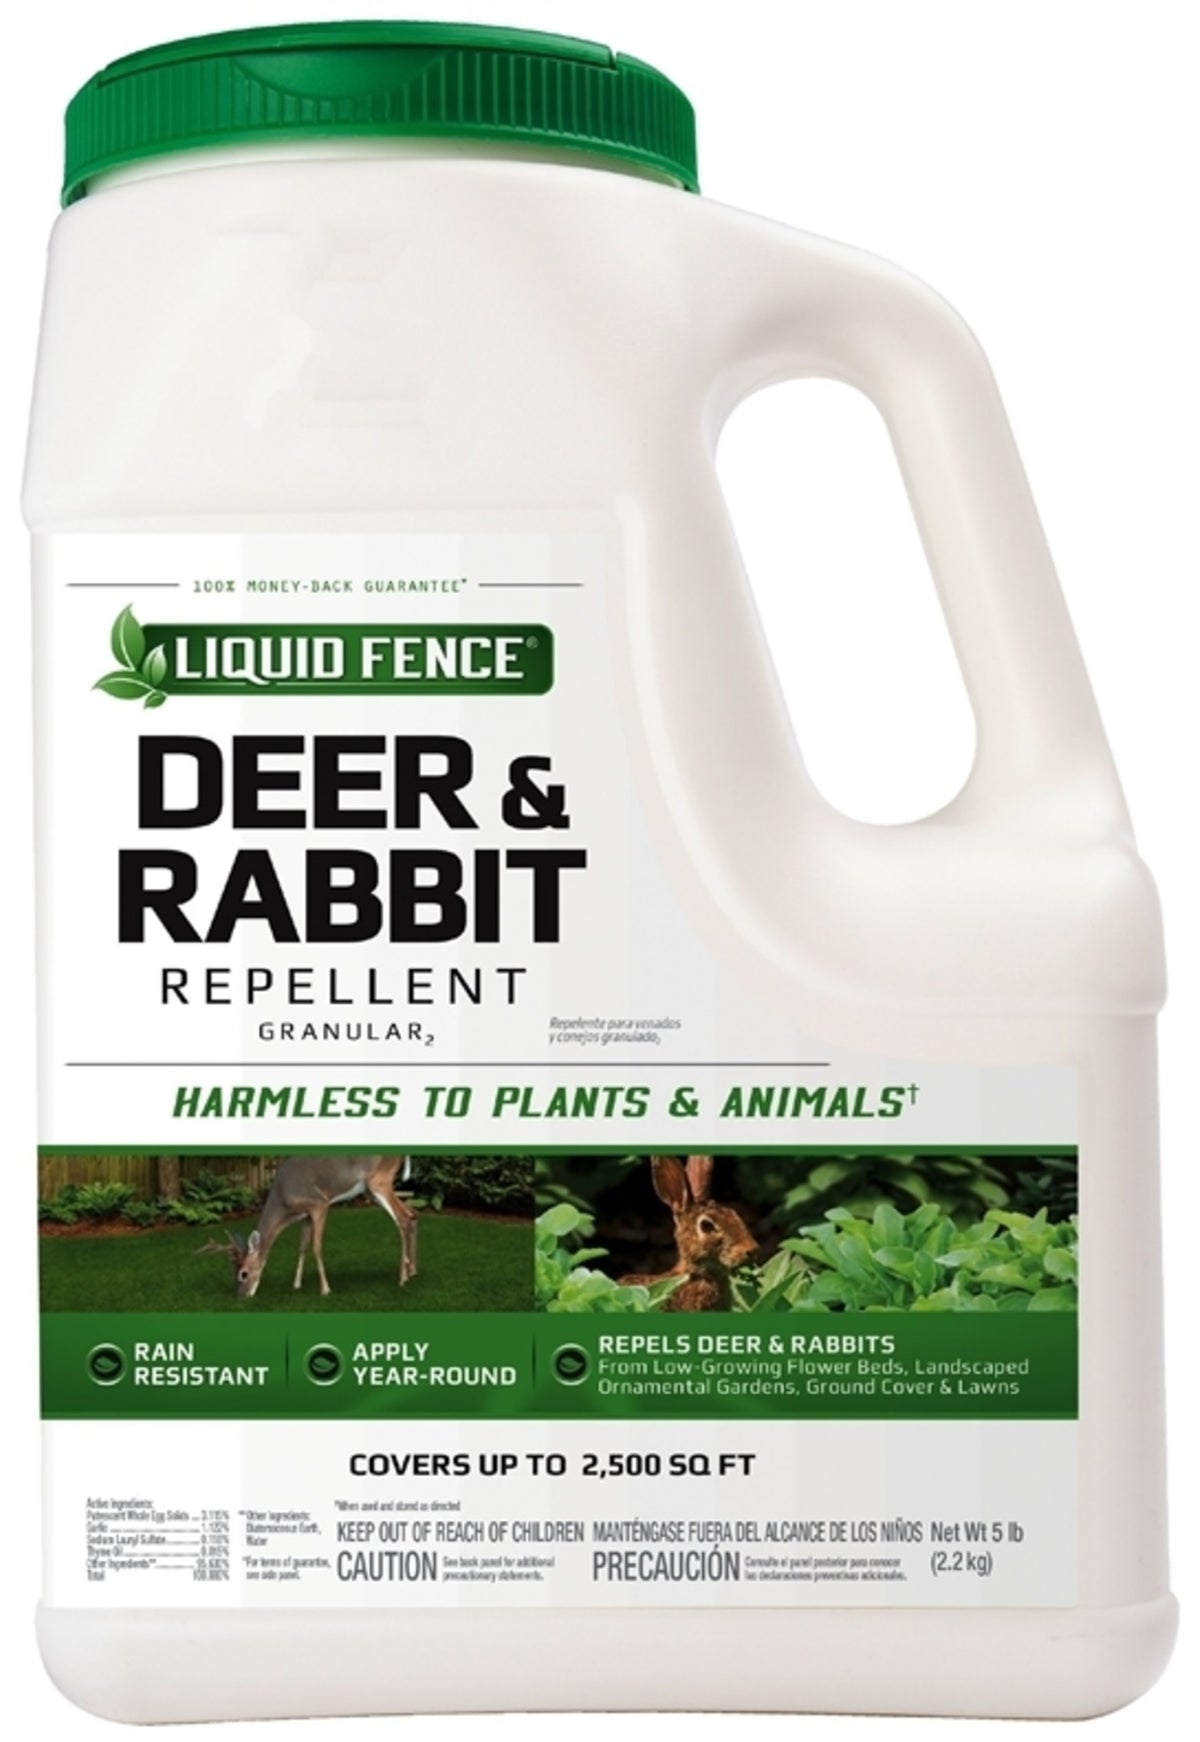 Liquid Fence HG-72654 Deer & Rabbit Repellent, 5 Lbs